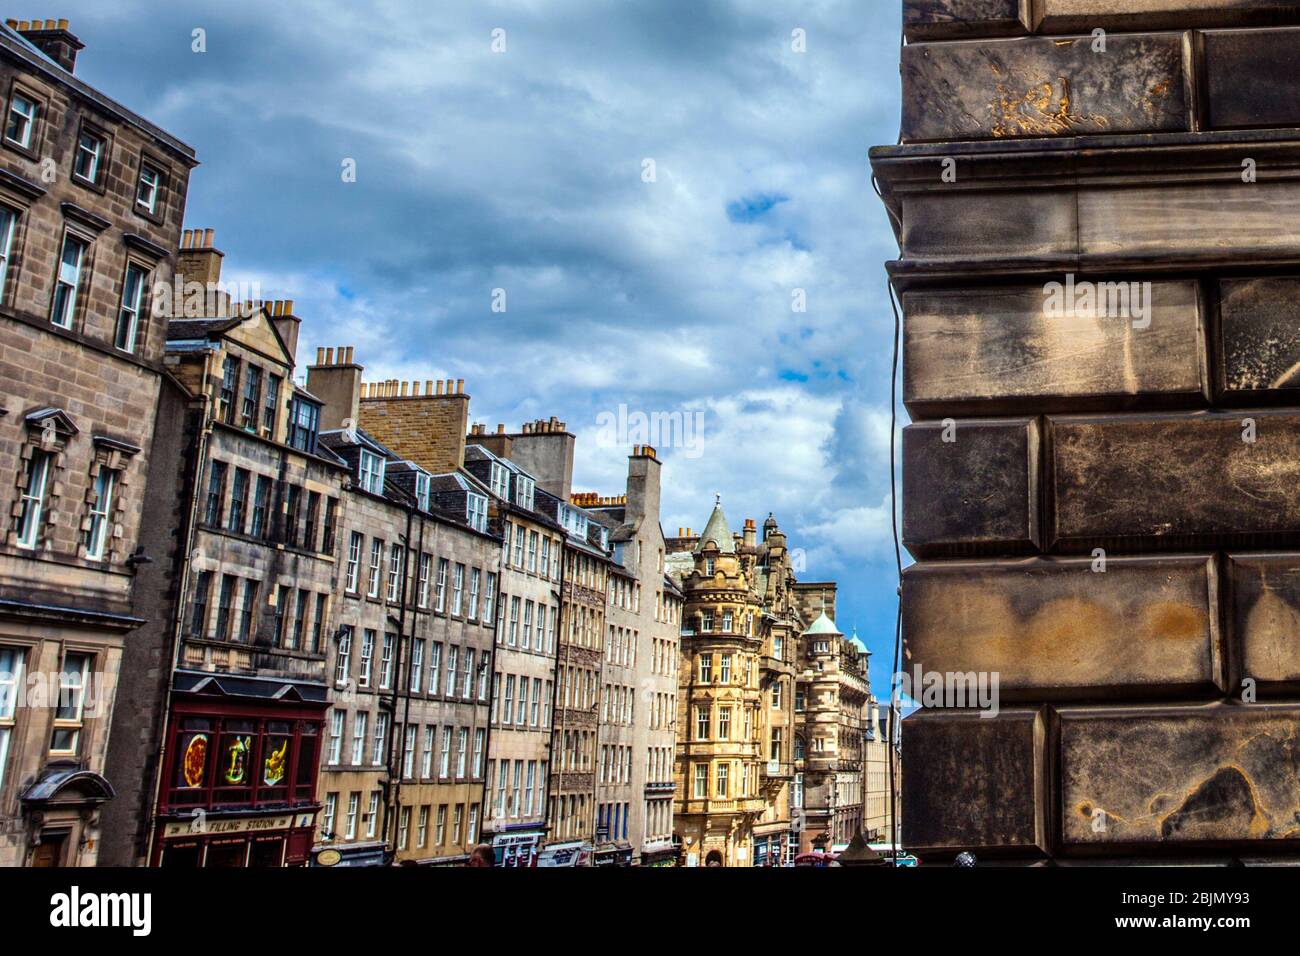 1 Parliament Square, Royal Mile, Old Town, Edinburgh, Scotland, United Kingdom, Europe. Stock Photo